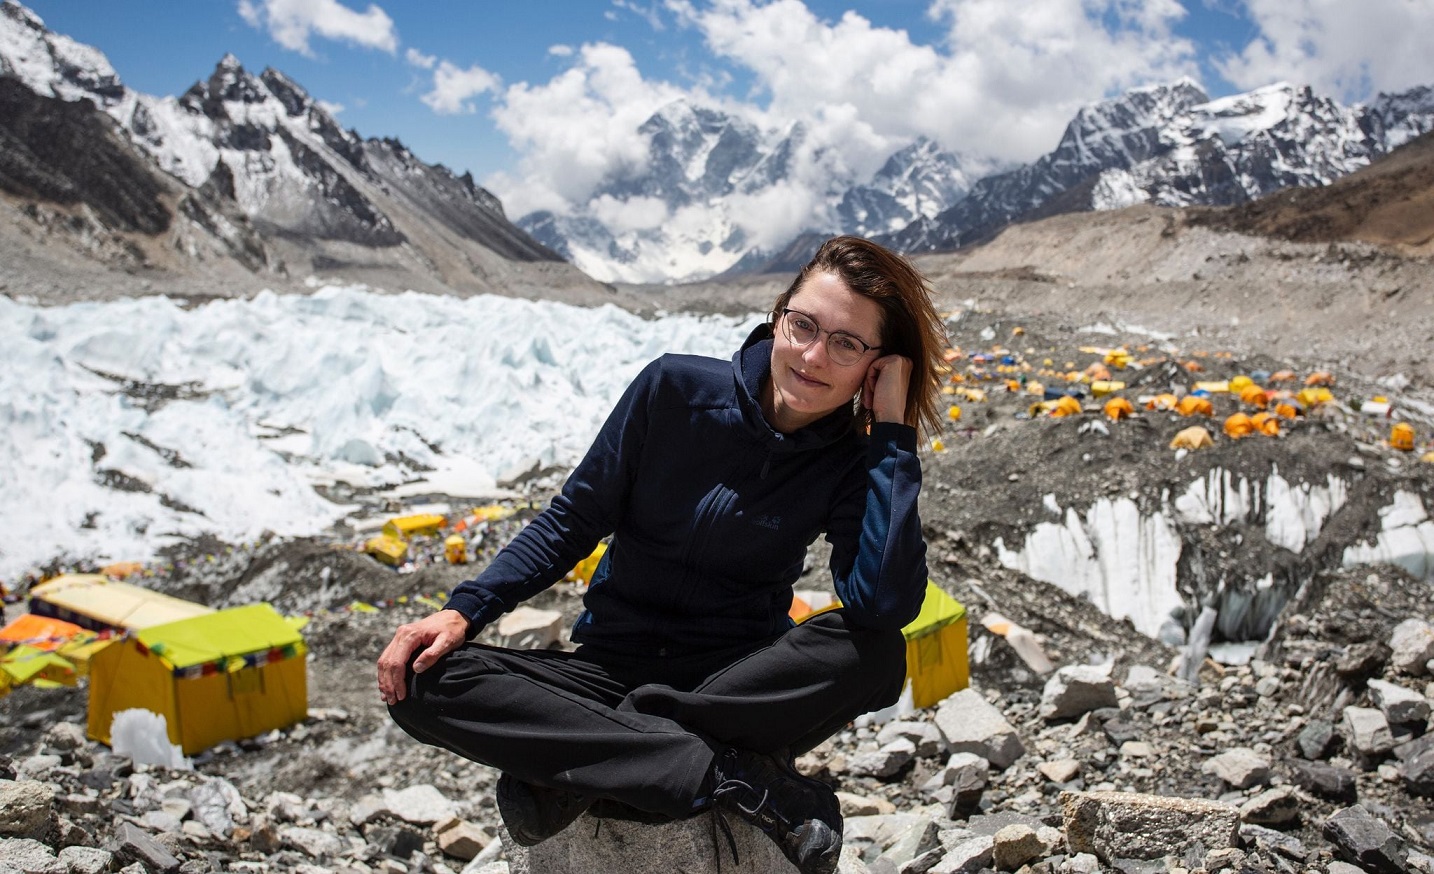 Magda Lassota w bazie pod Everestem - fot. z arch. Magda Lassota